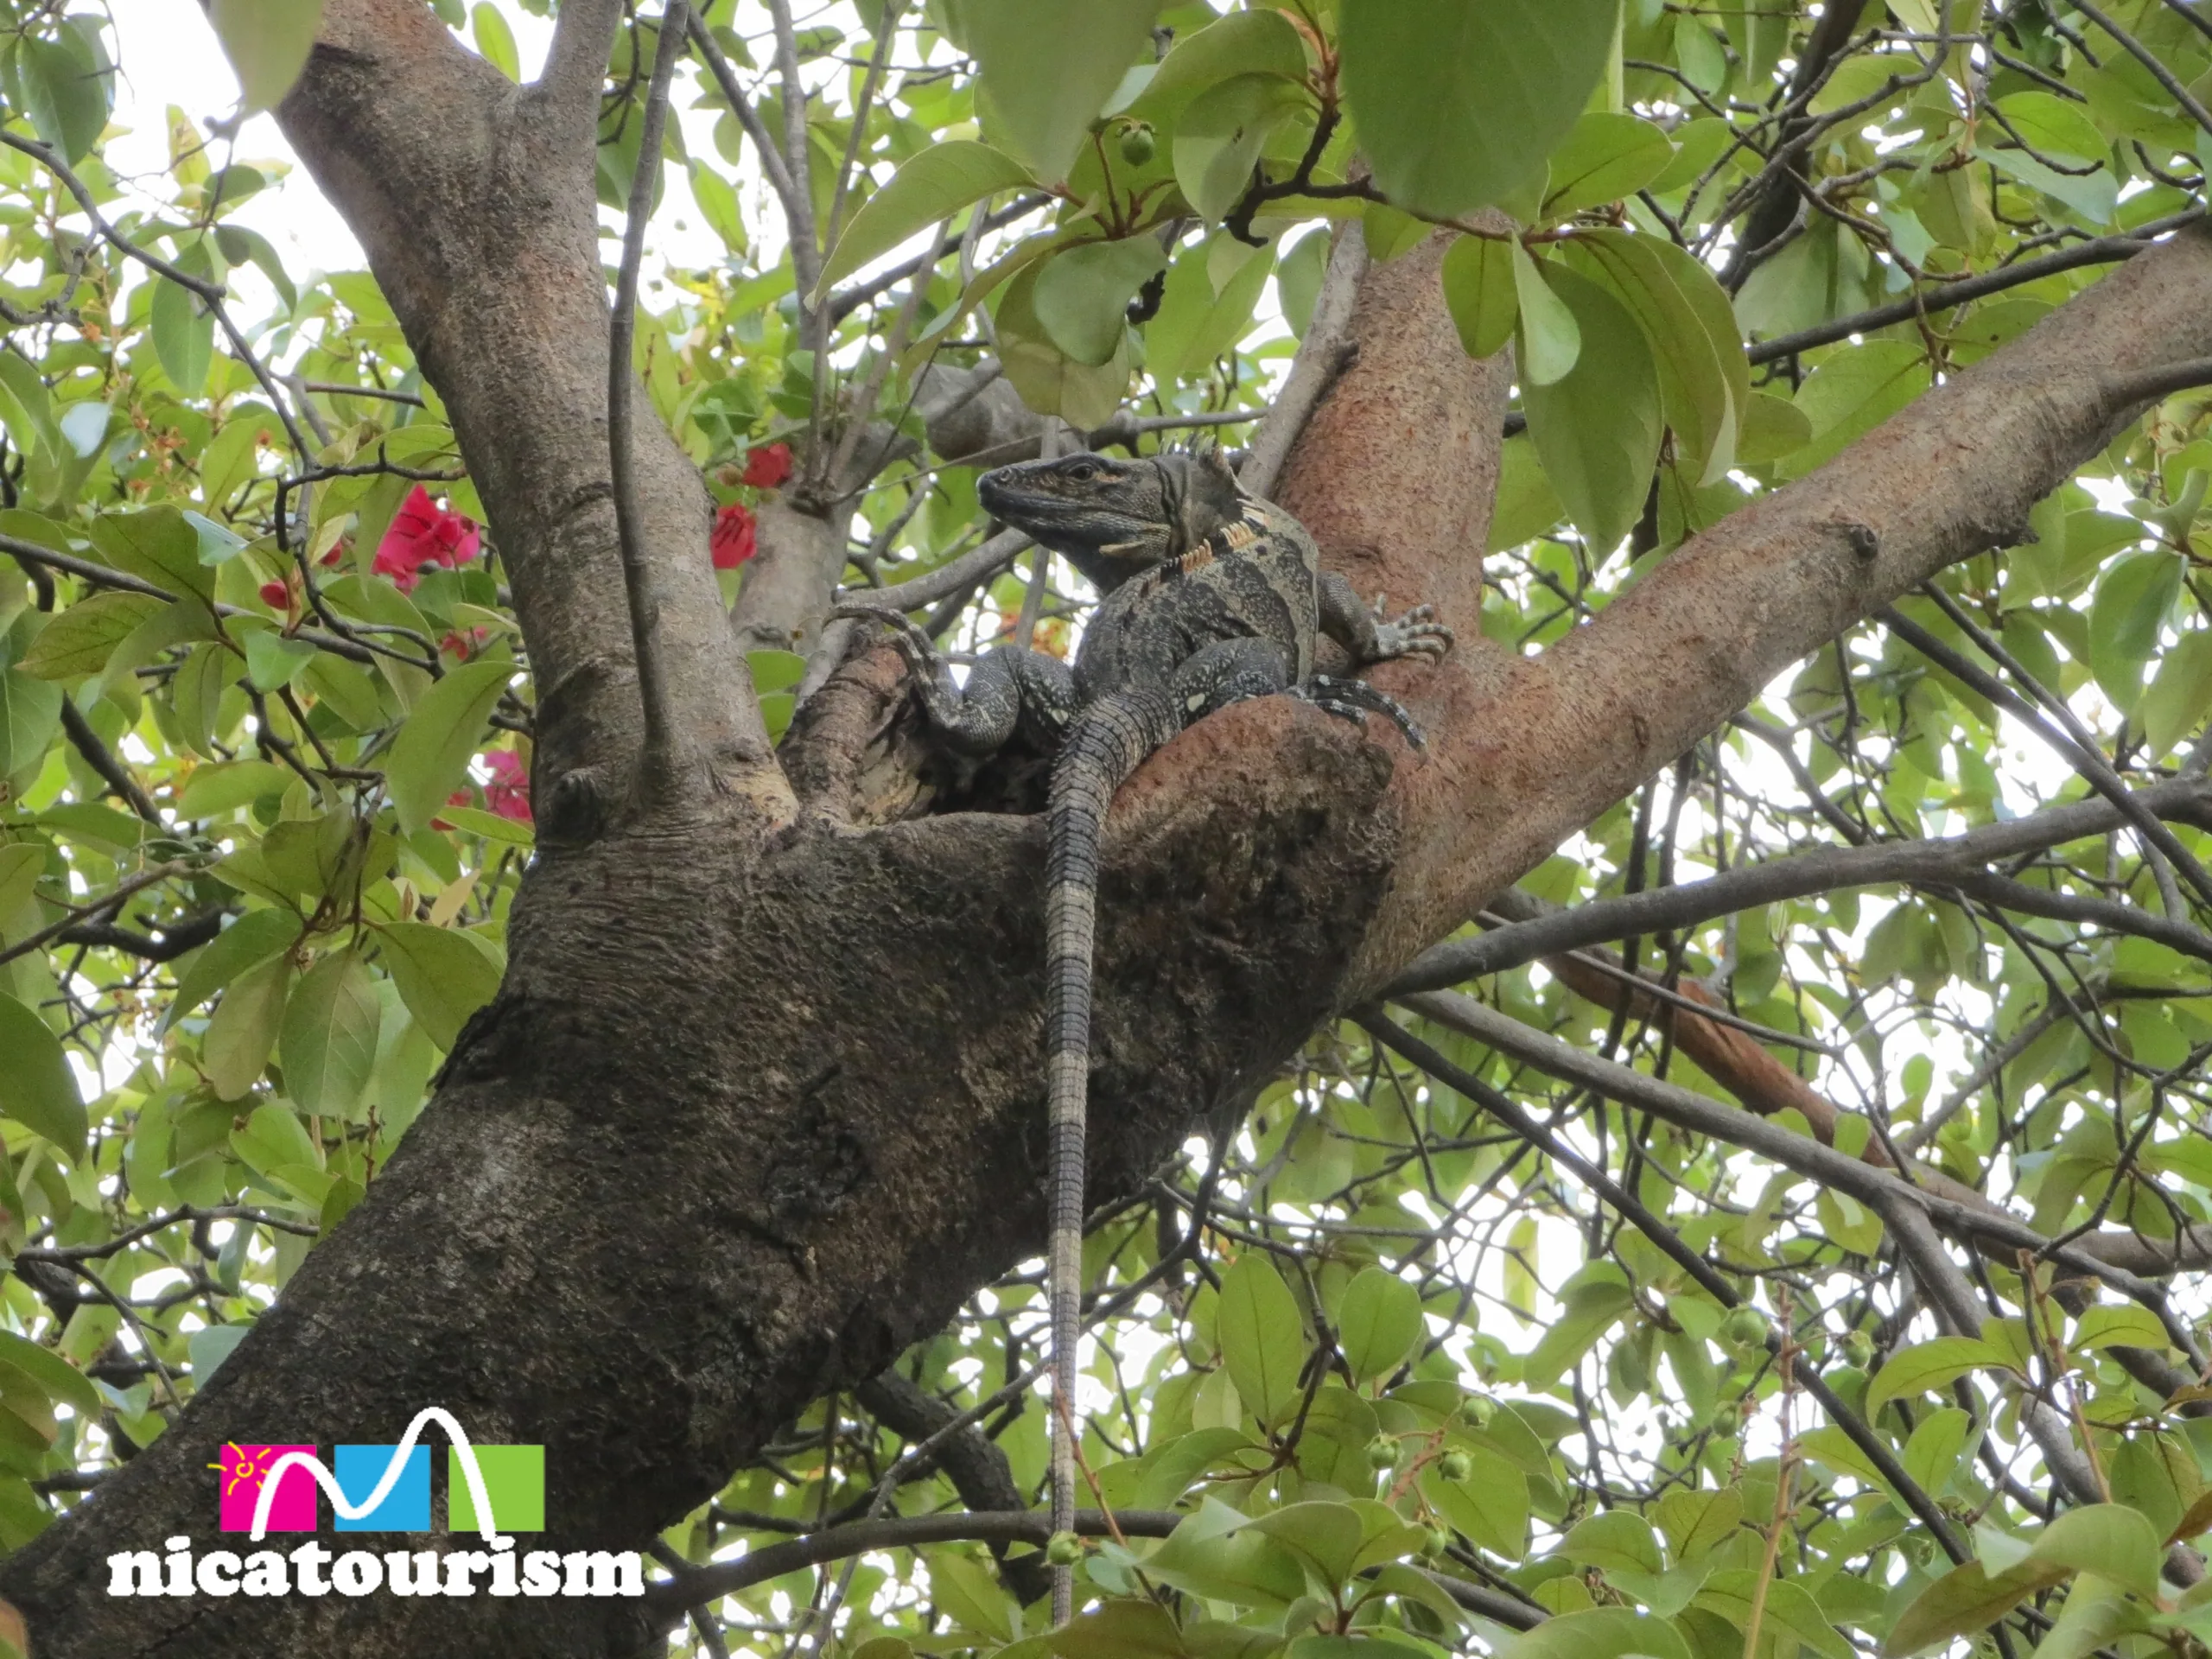 Same reptile in a tree in Nicaragua